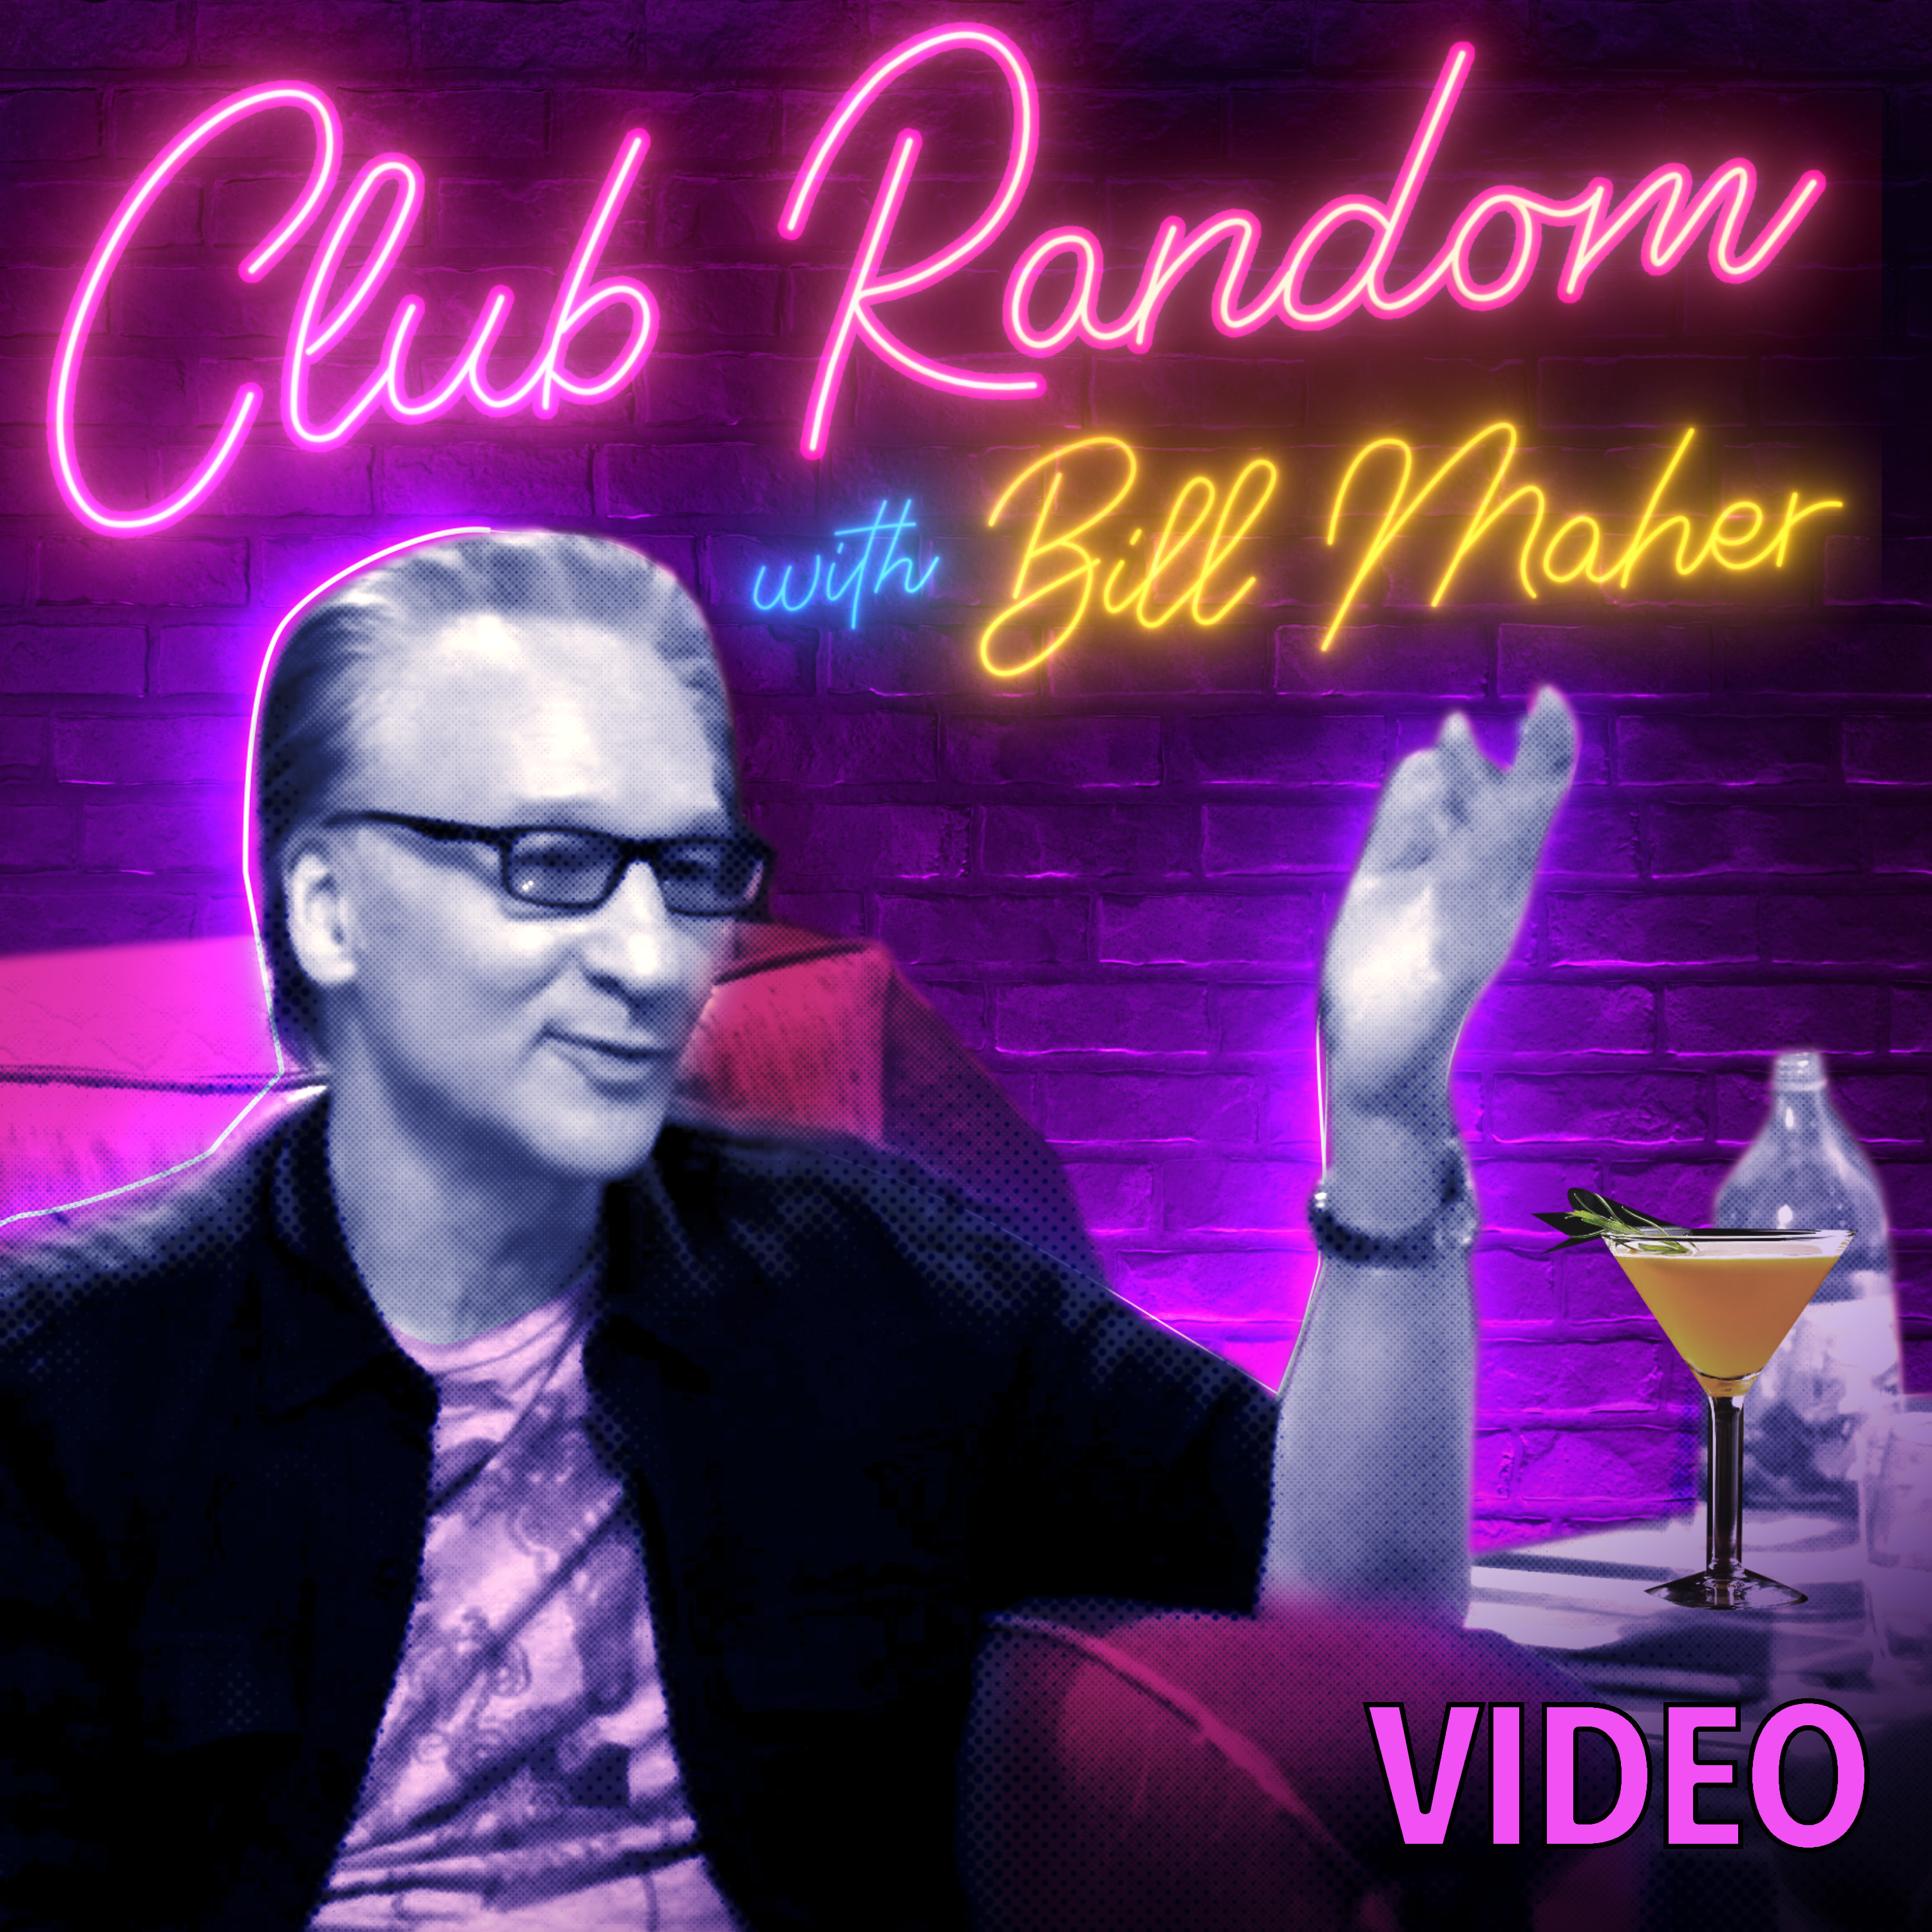 Video: Mark Cuban | Club Random with Bill Maher